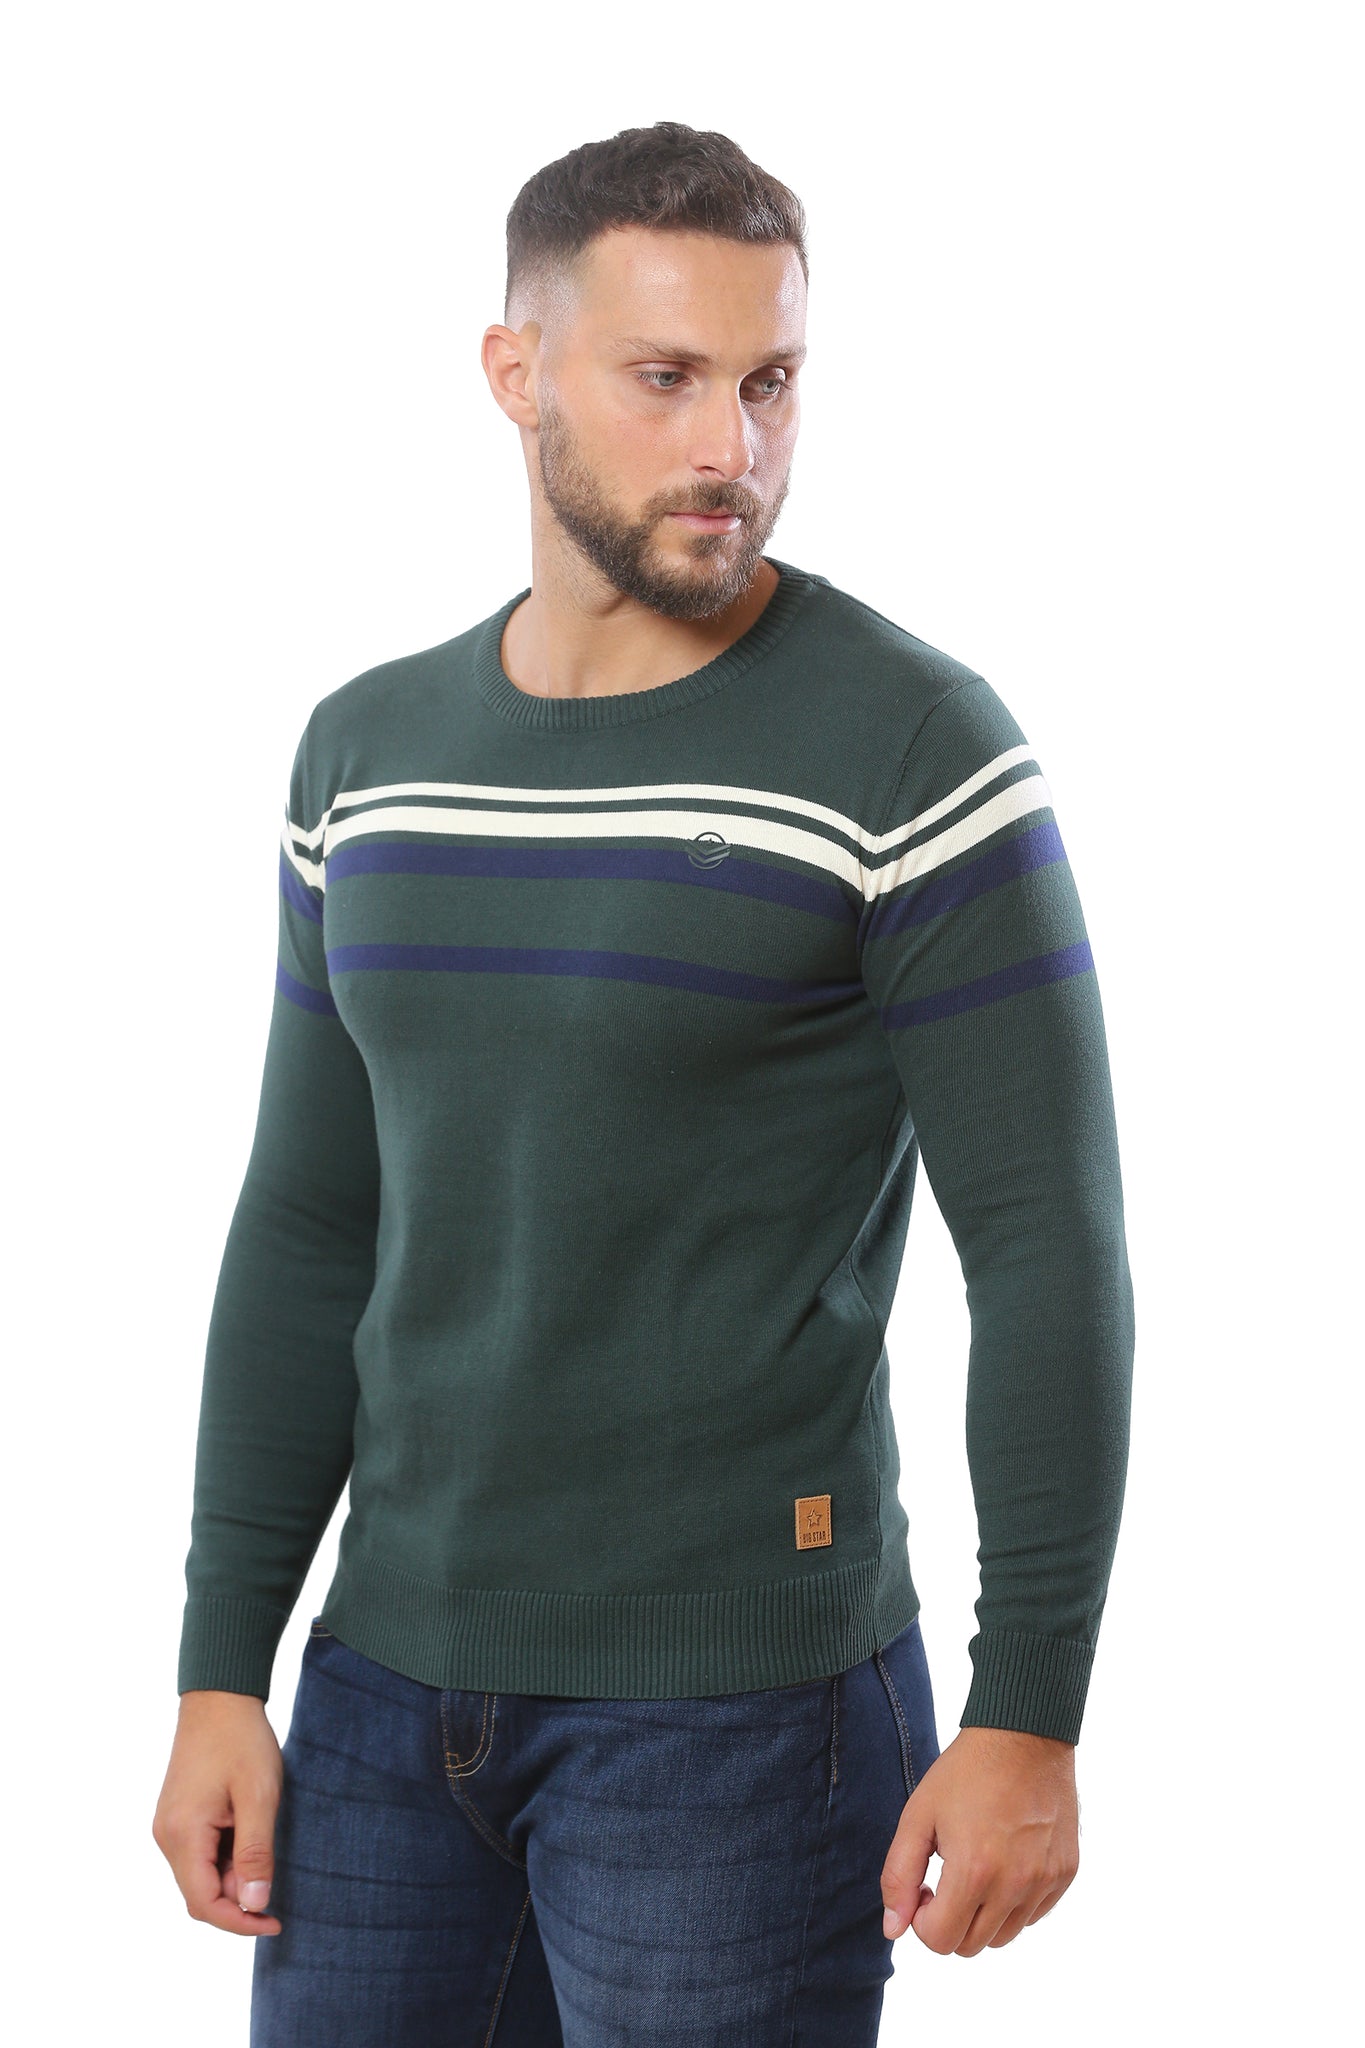 Sweater with Stripes | Khaki